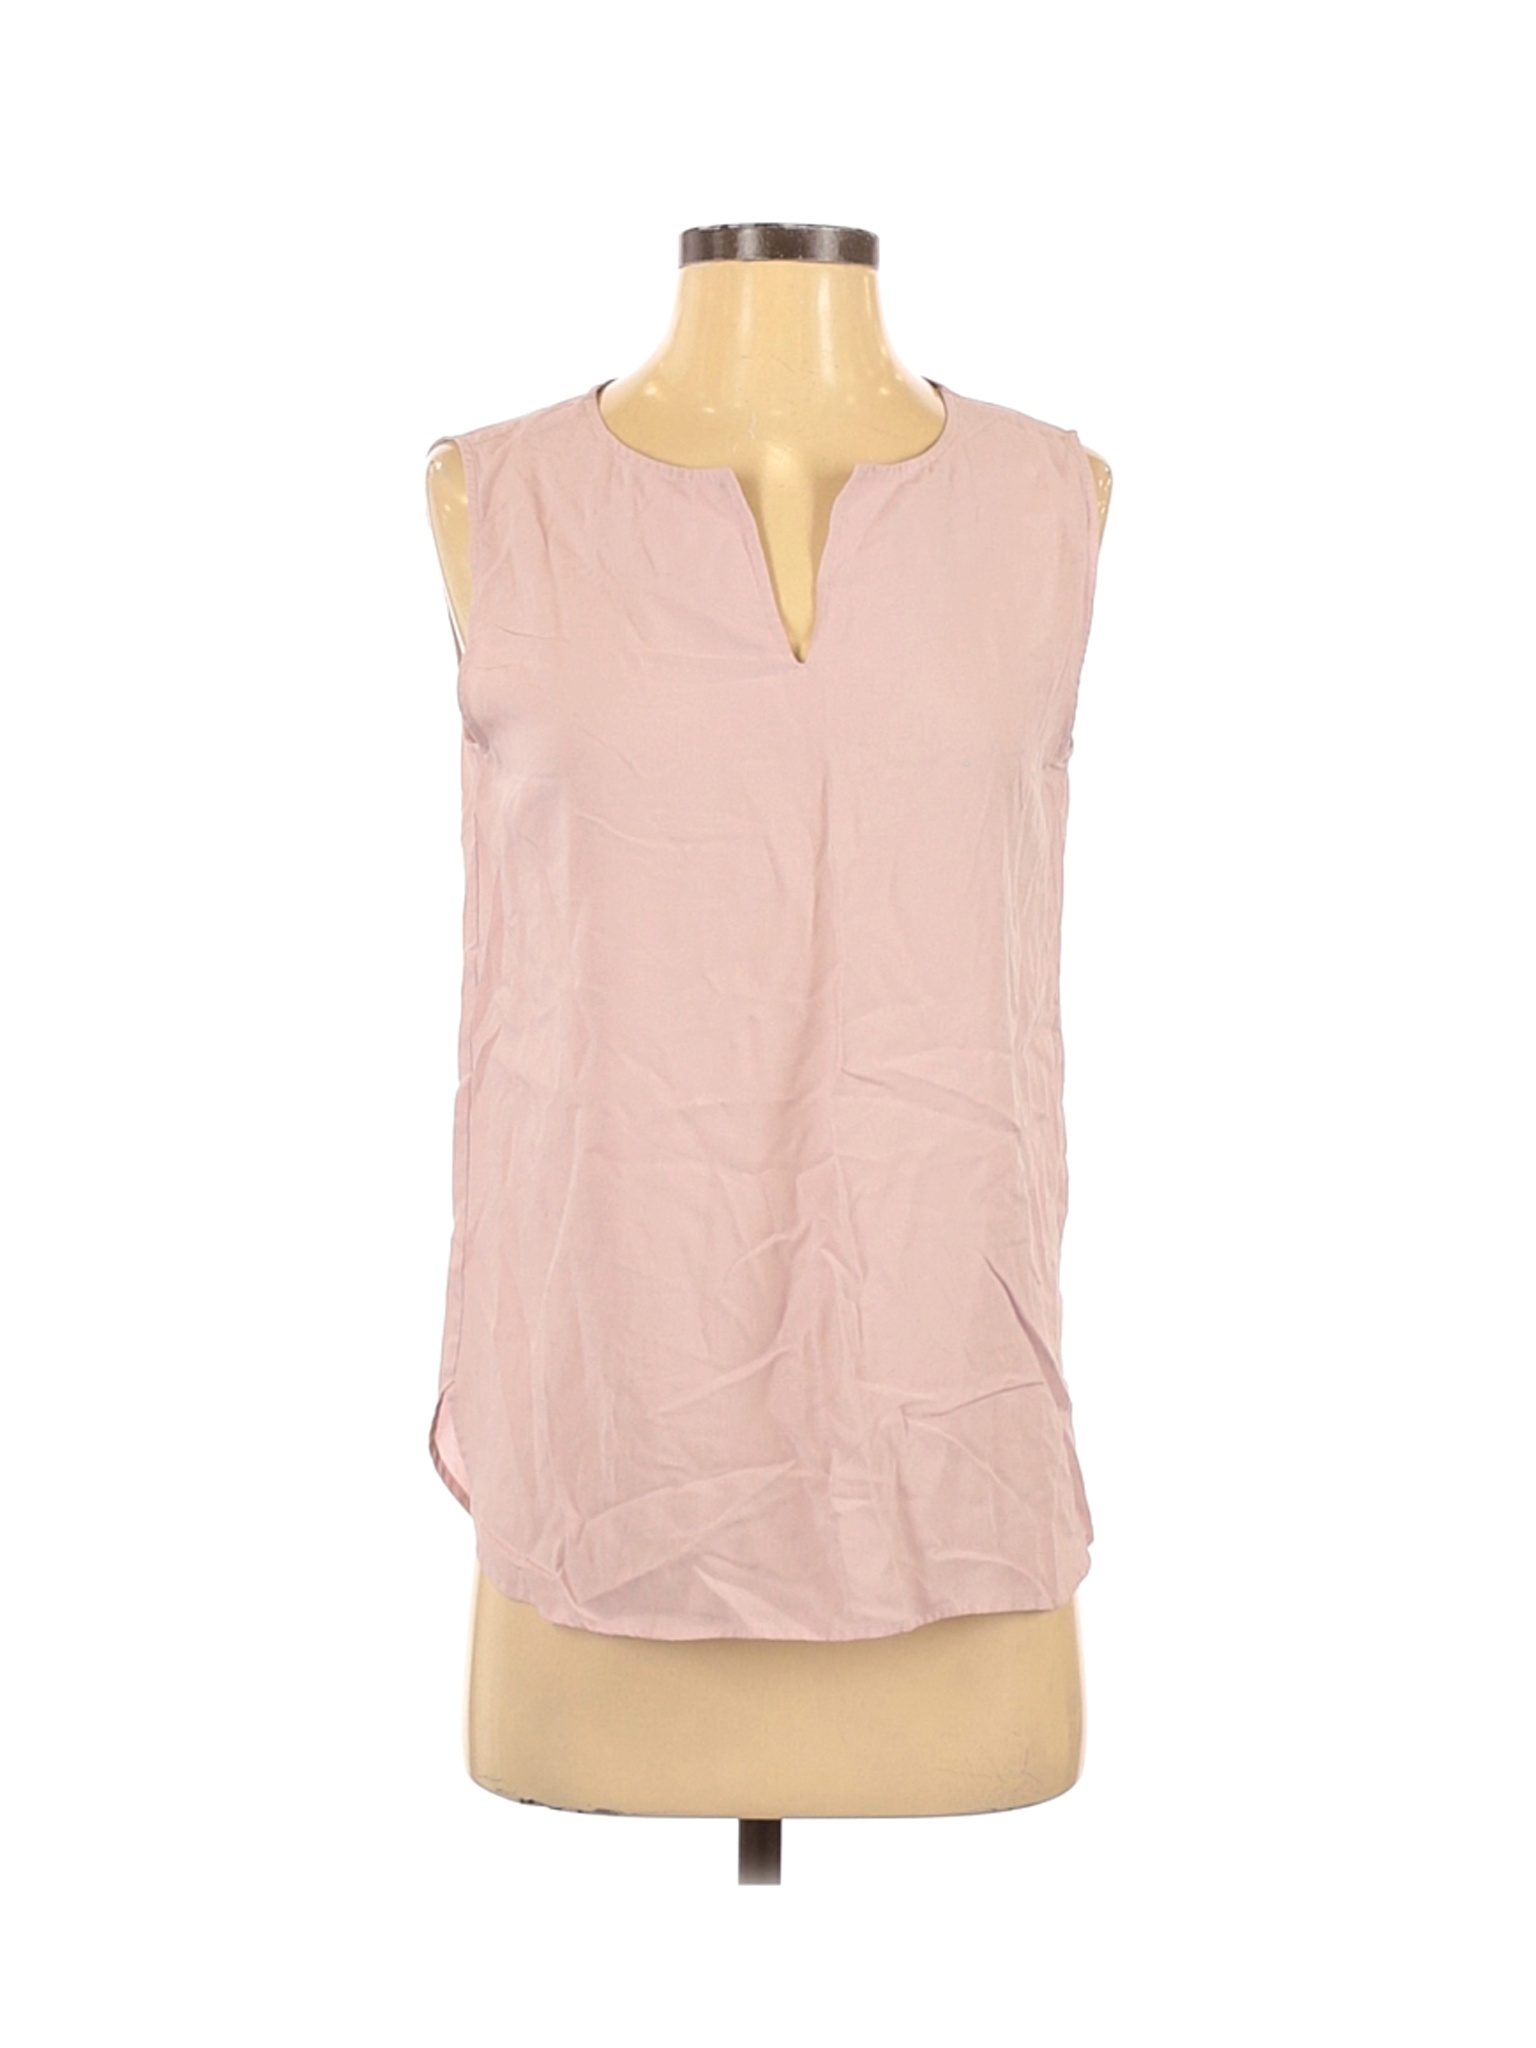 Uniqlo Women Pink Sleeveless Blouse S | eBay